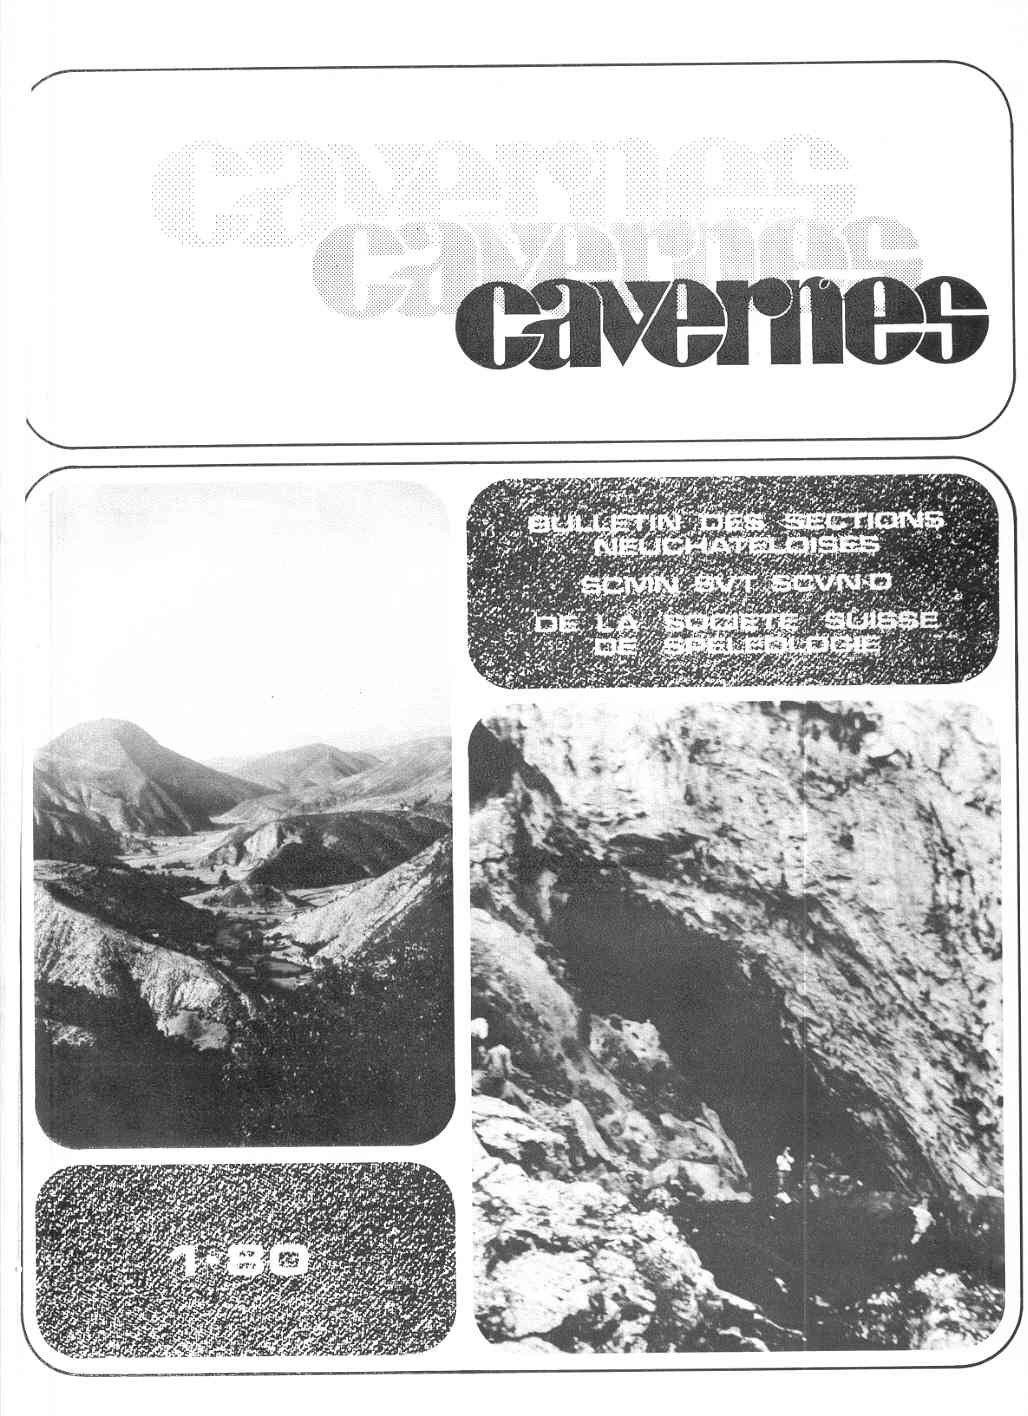 Cavernes/copertina anno 1980 n°1.jpg